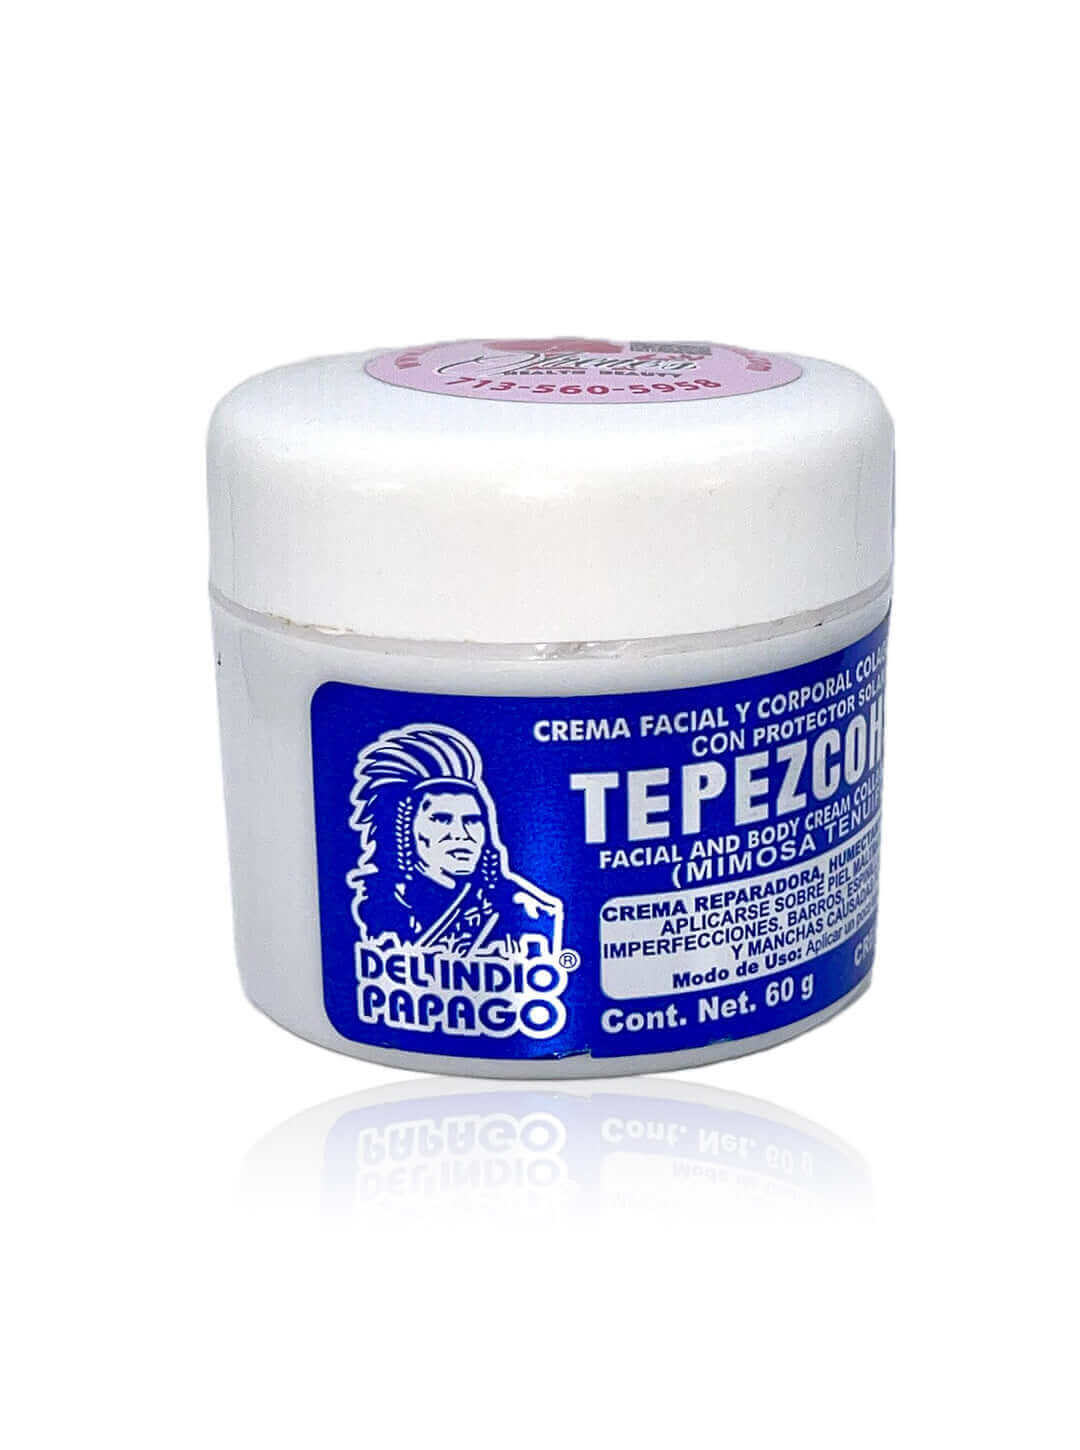 Tepezcohuite Crema facial Colageno, Vitamina E | La Crema La Milagrosa